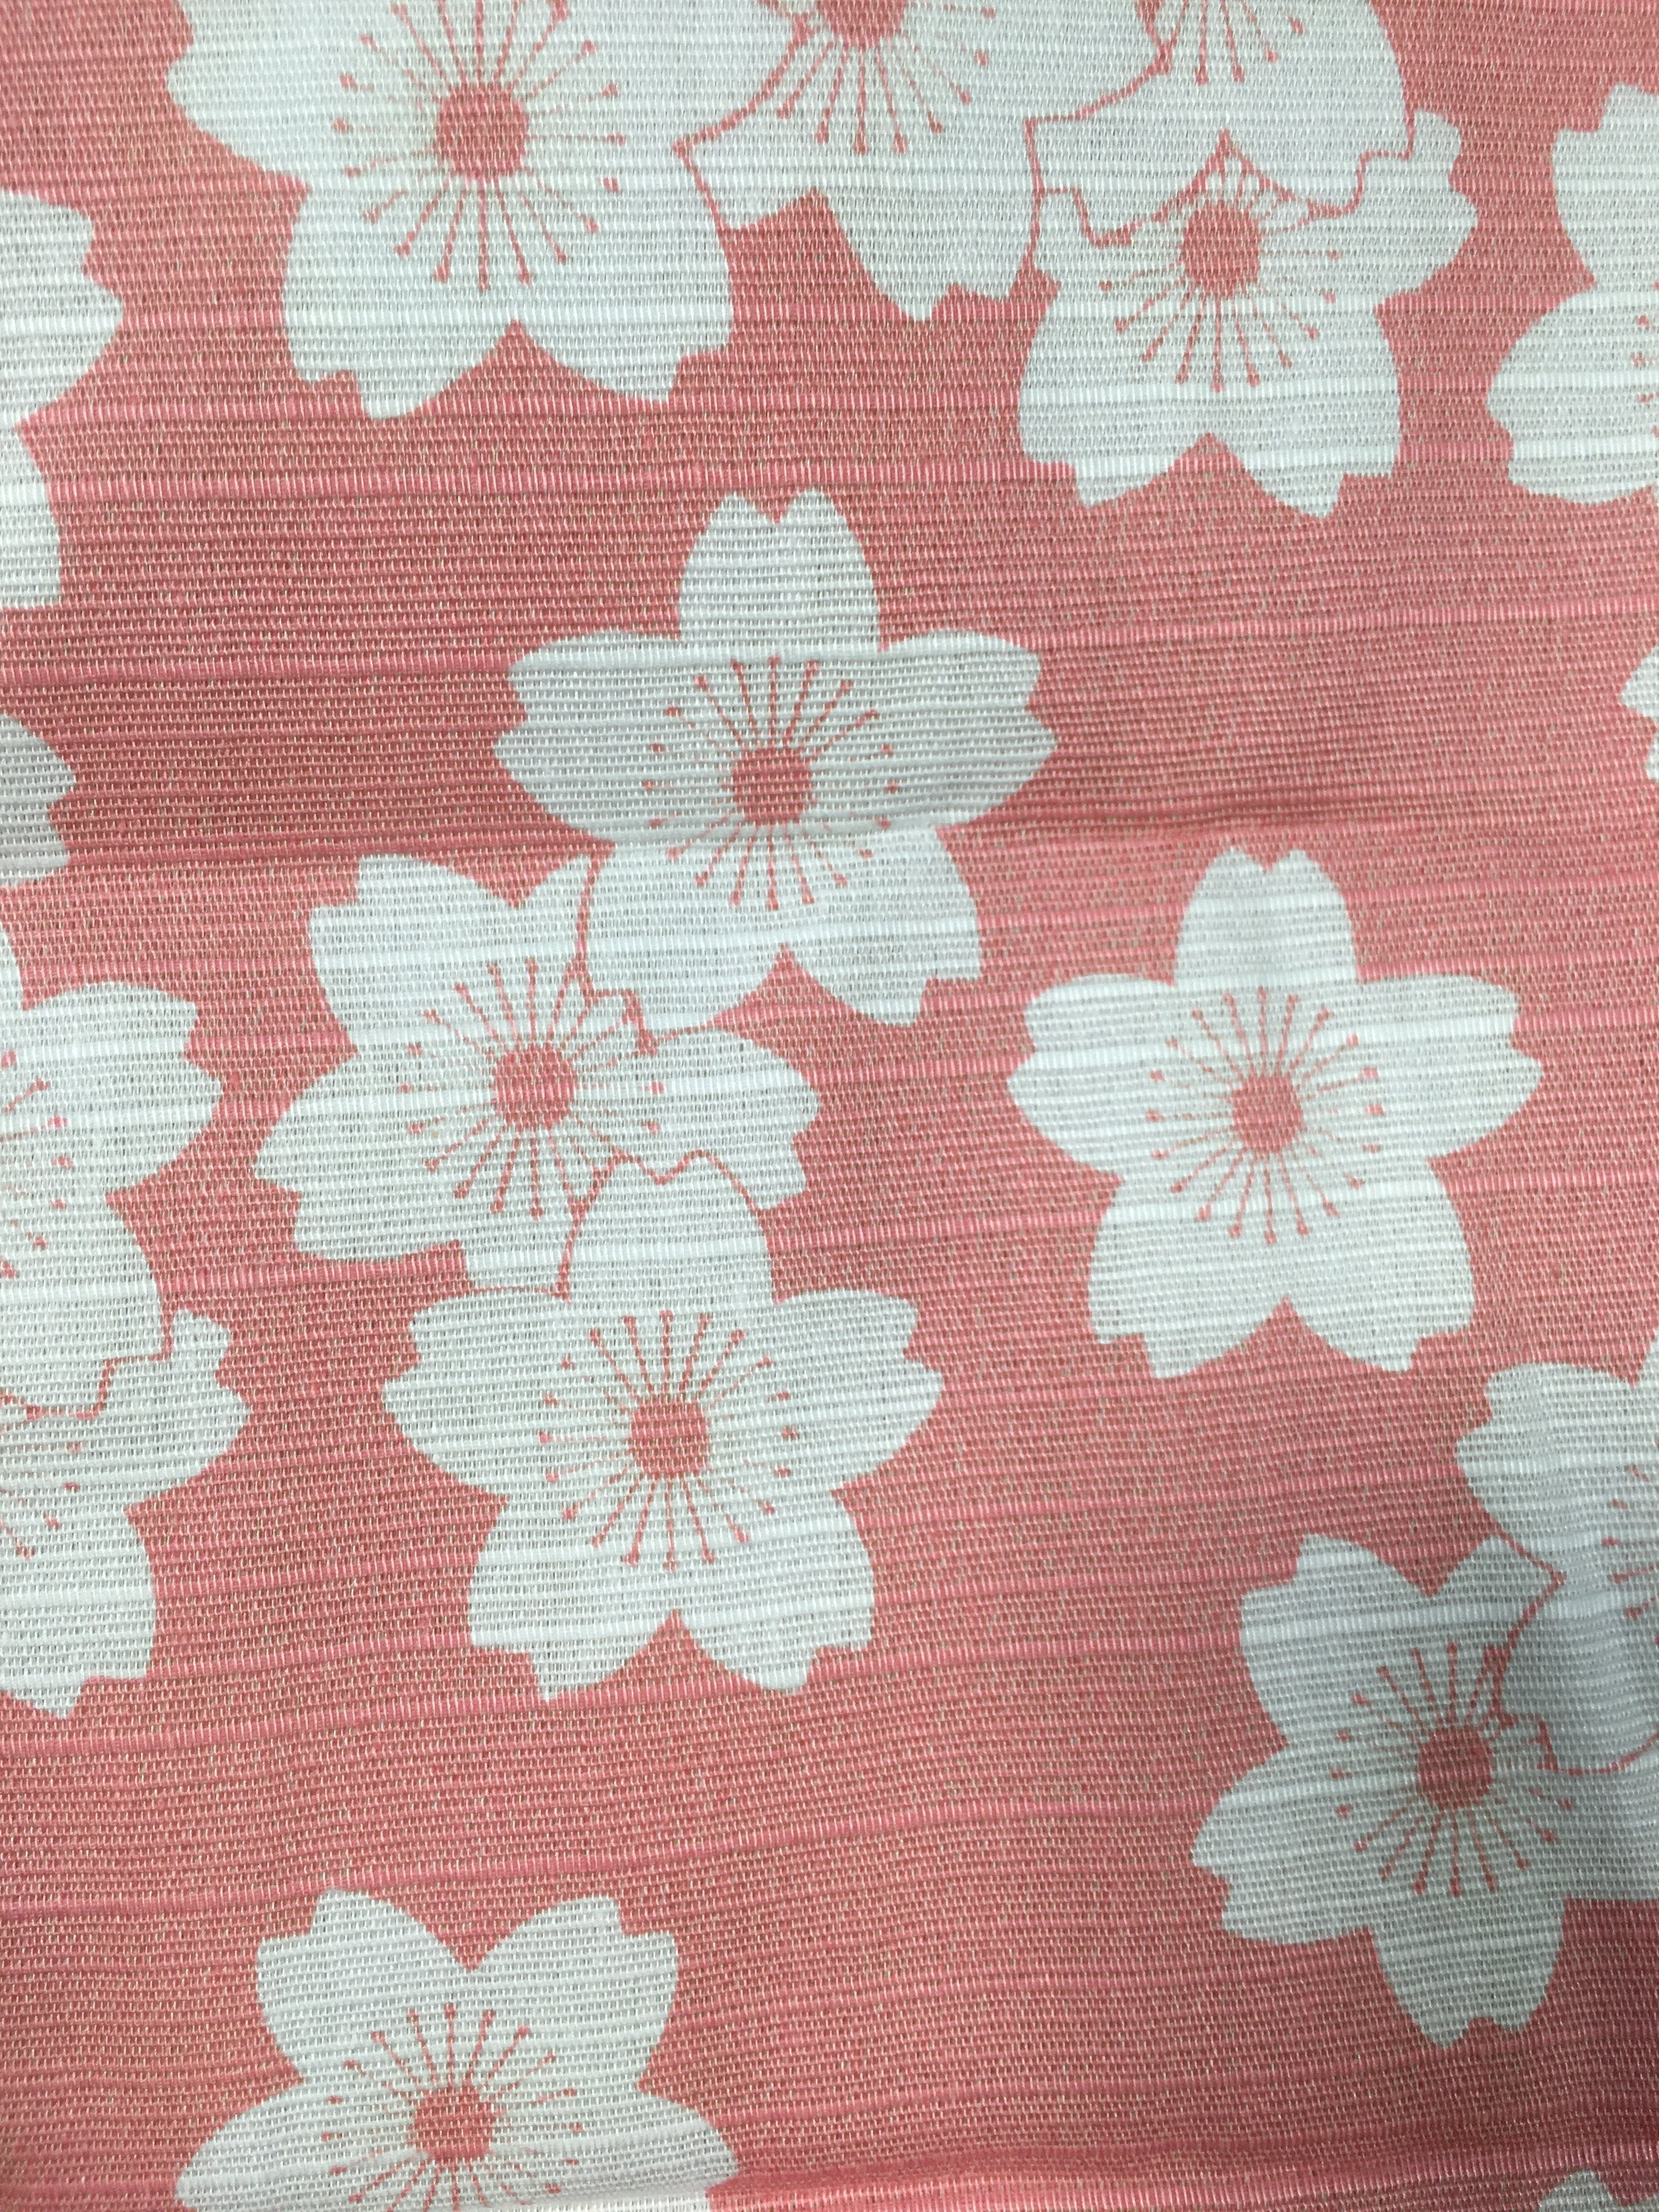 Japanese Wrap Cloth Furoshiki Fabric Cotton Reversible pink light yellow flowers